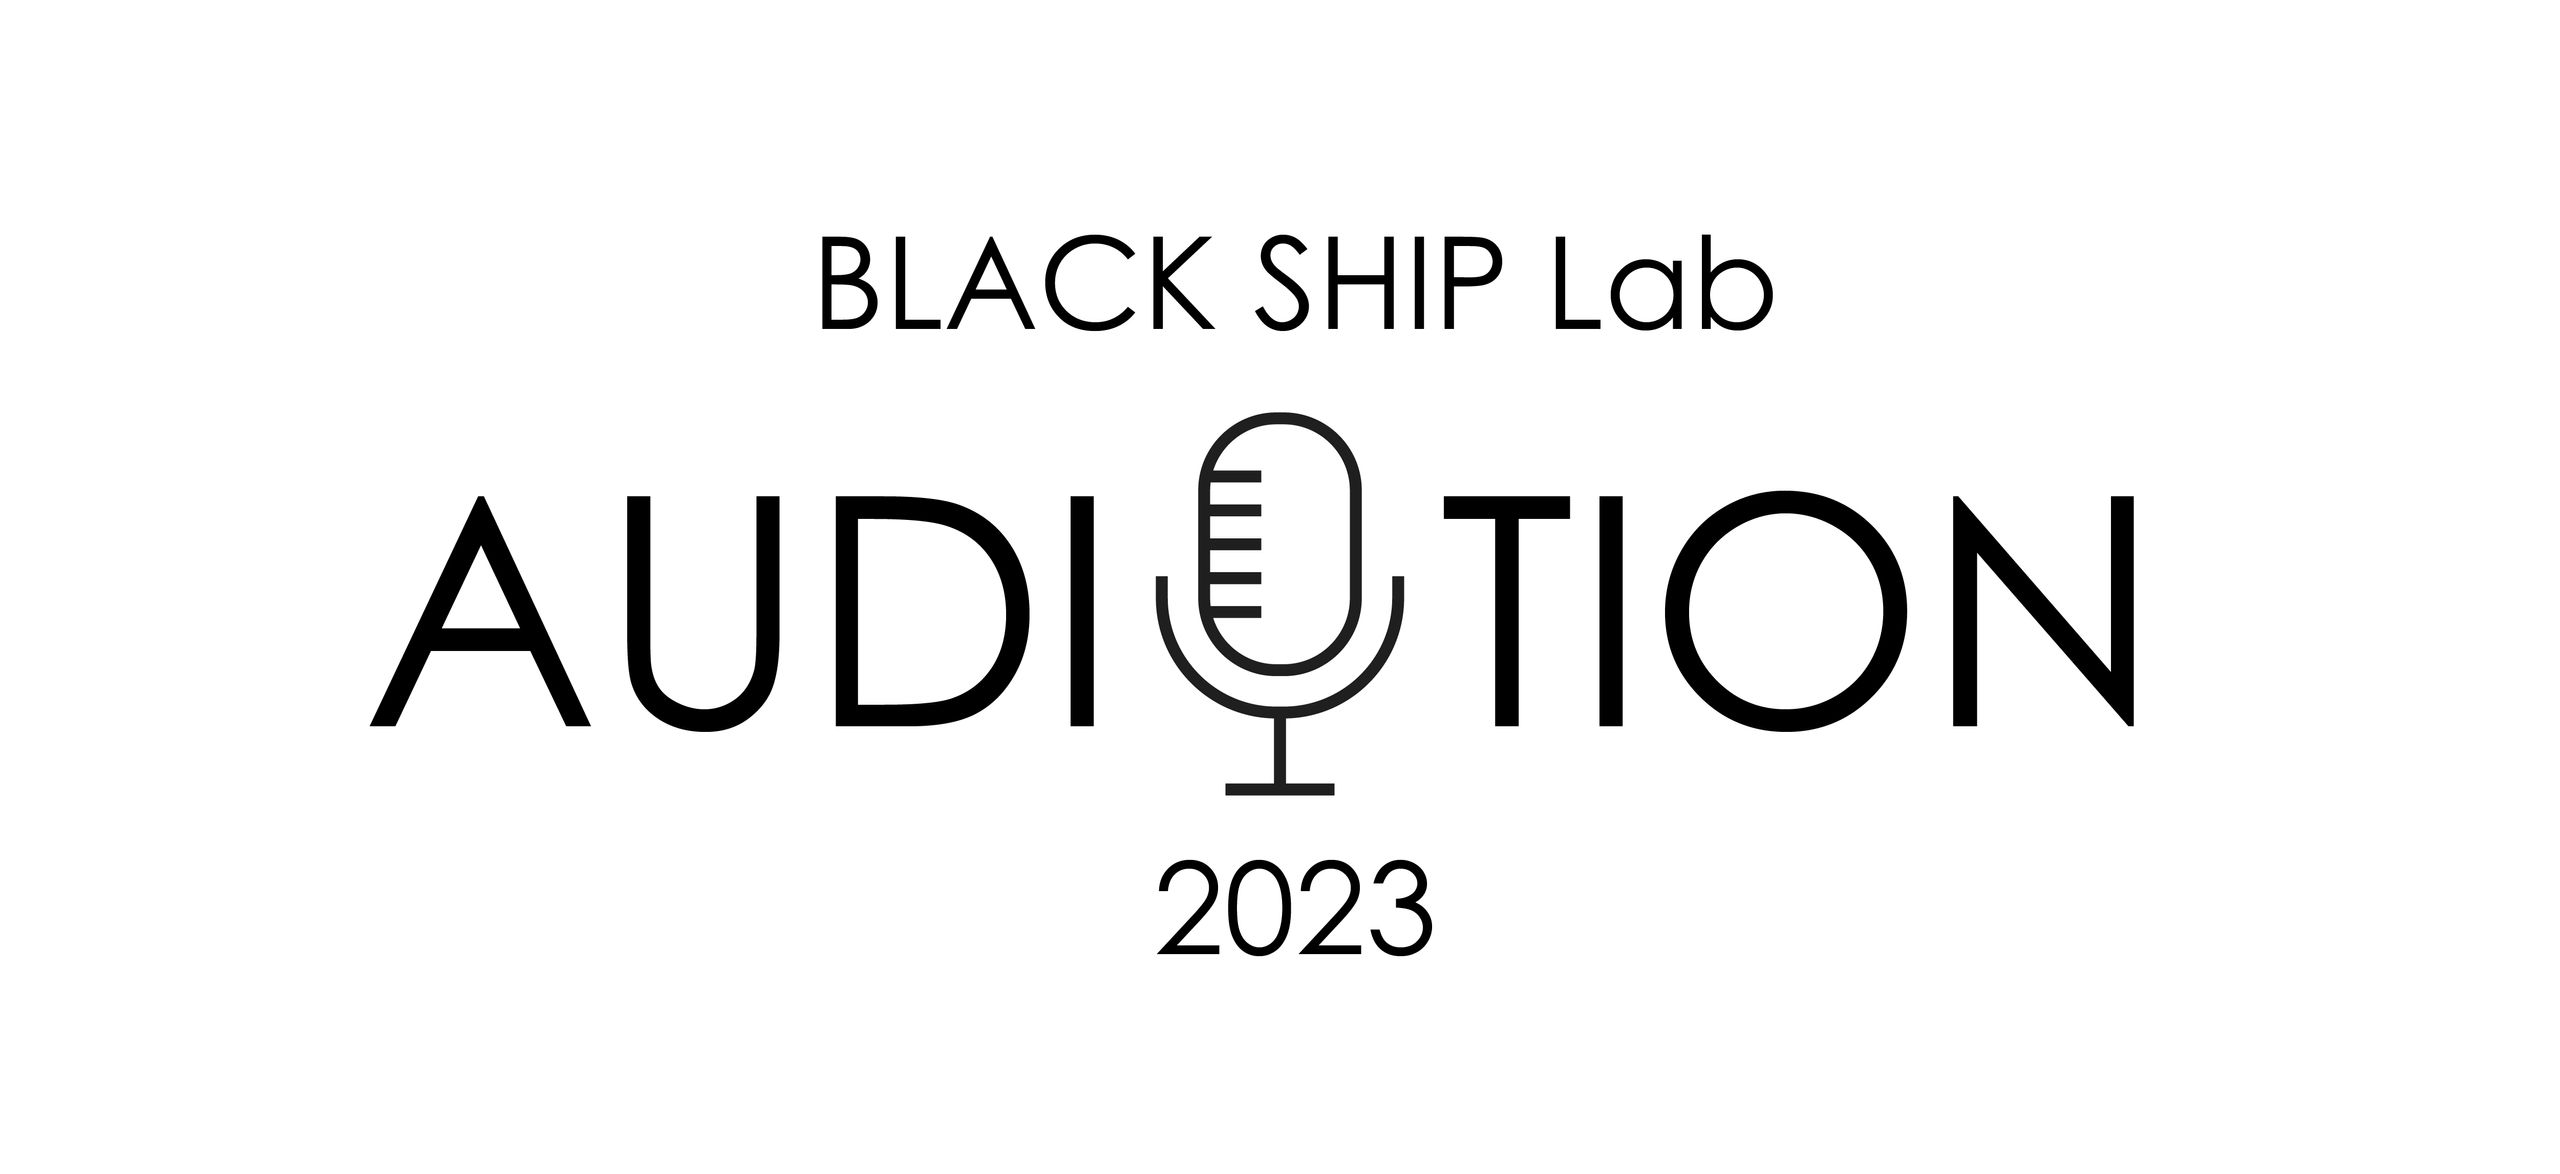 BLACK SHIP Lab  AUDITION2023